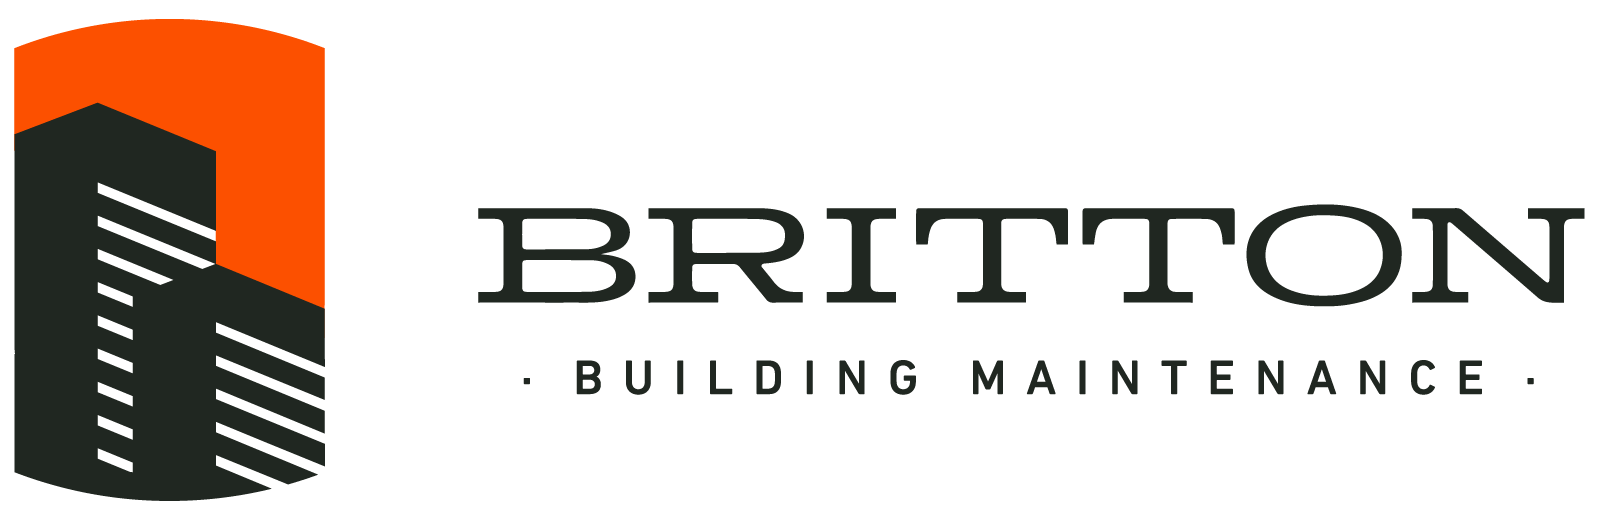 Britton Building Maintenance